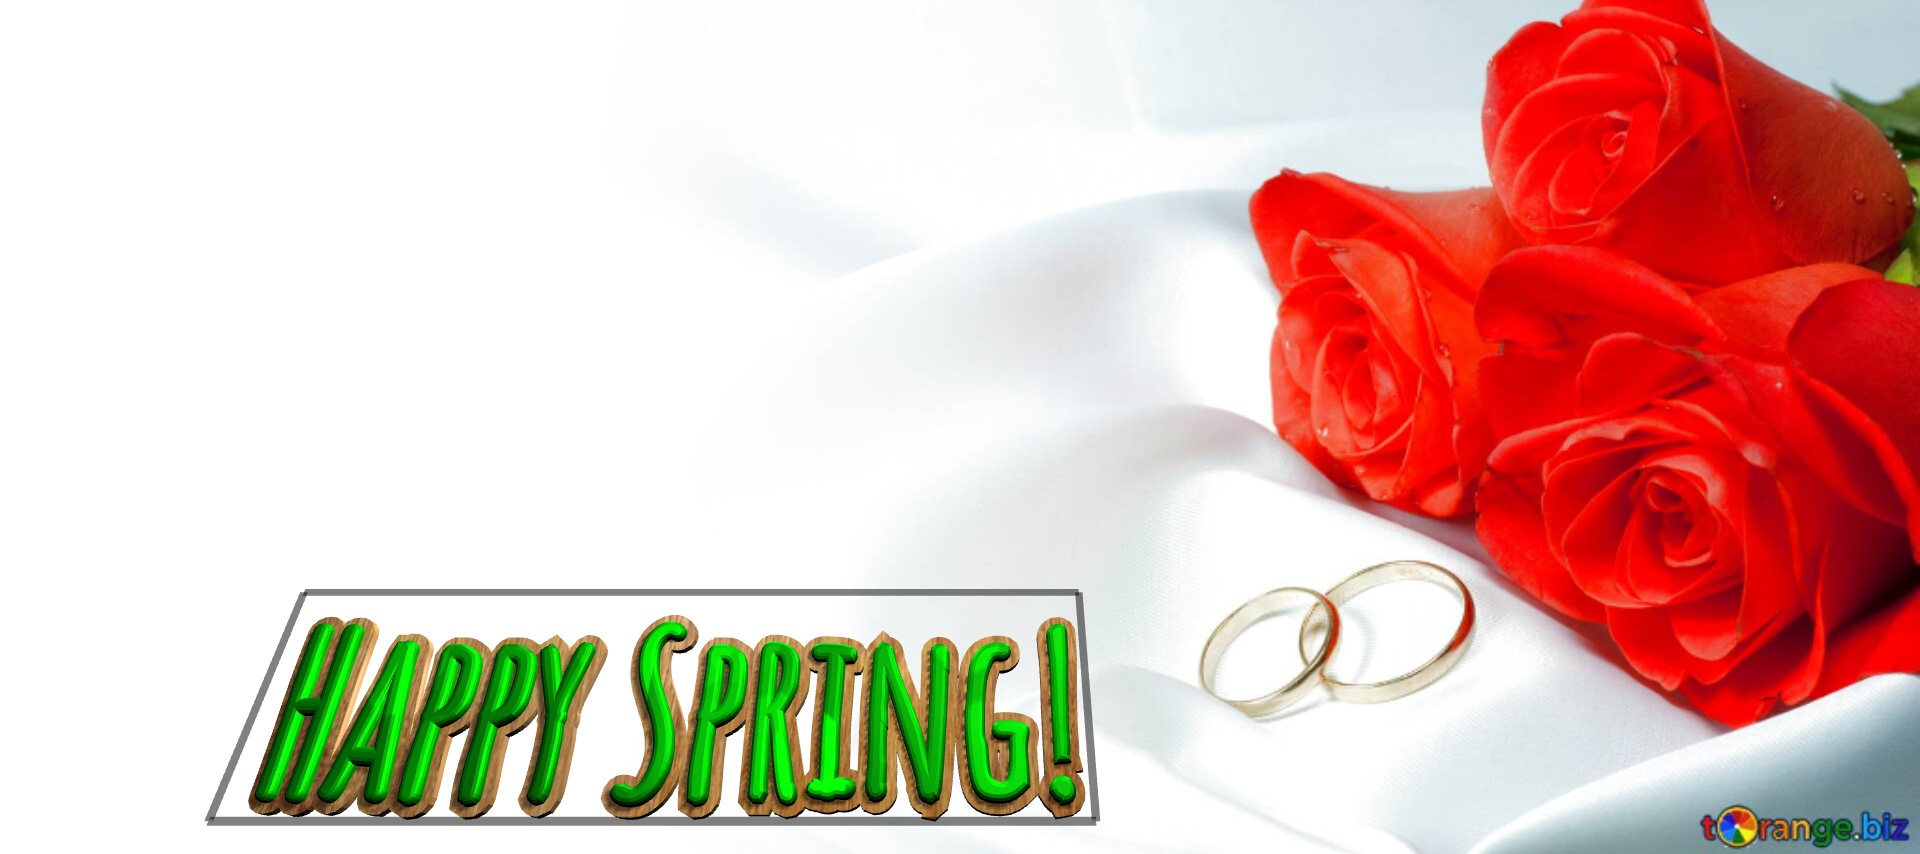 Happy Spring!  Invitation wedding background №0